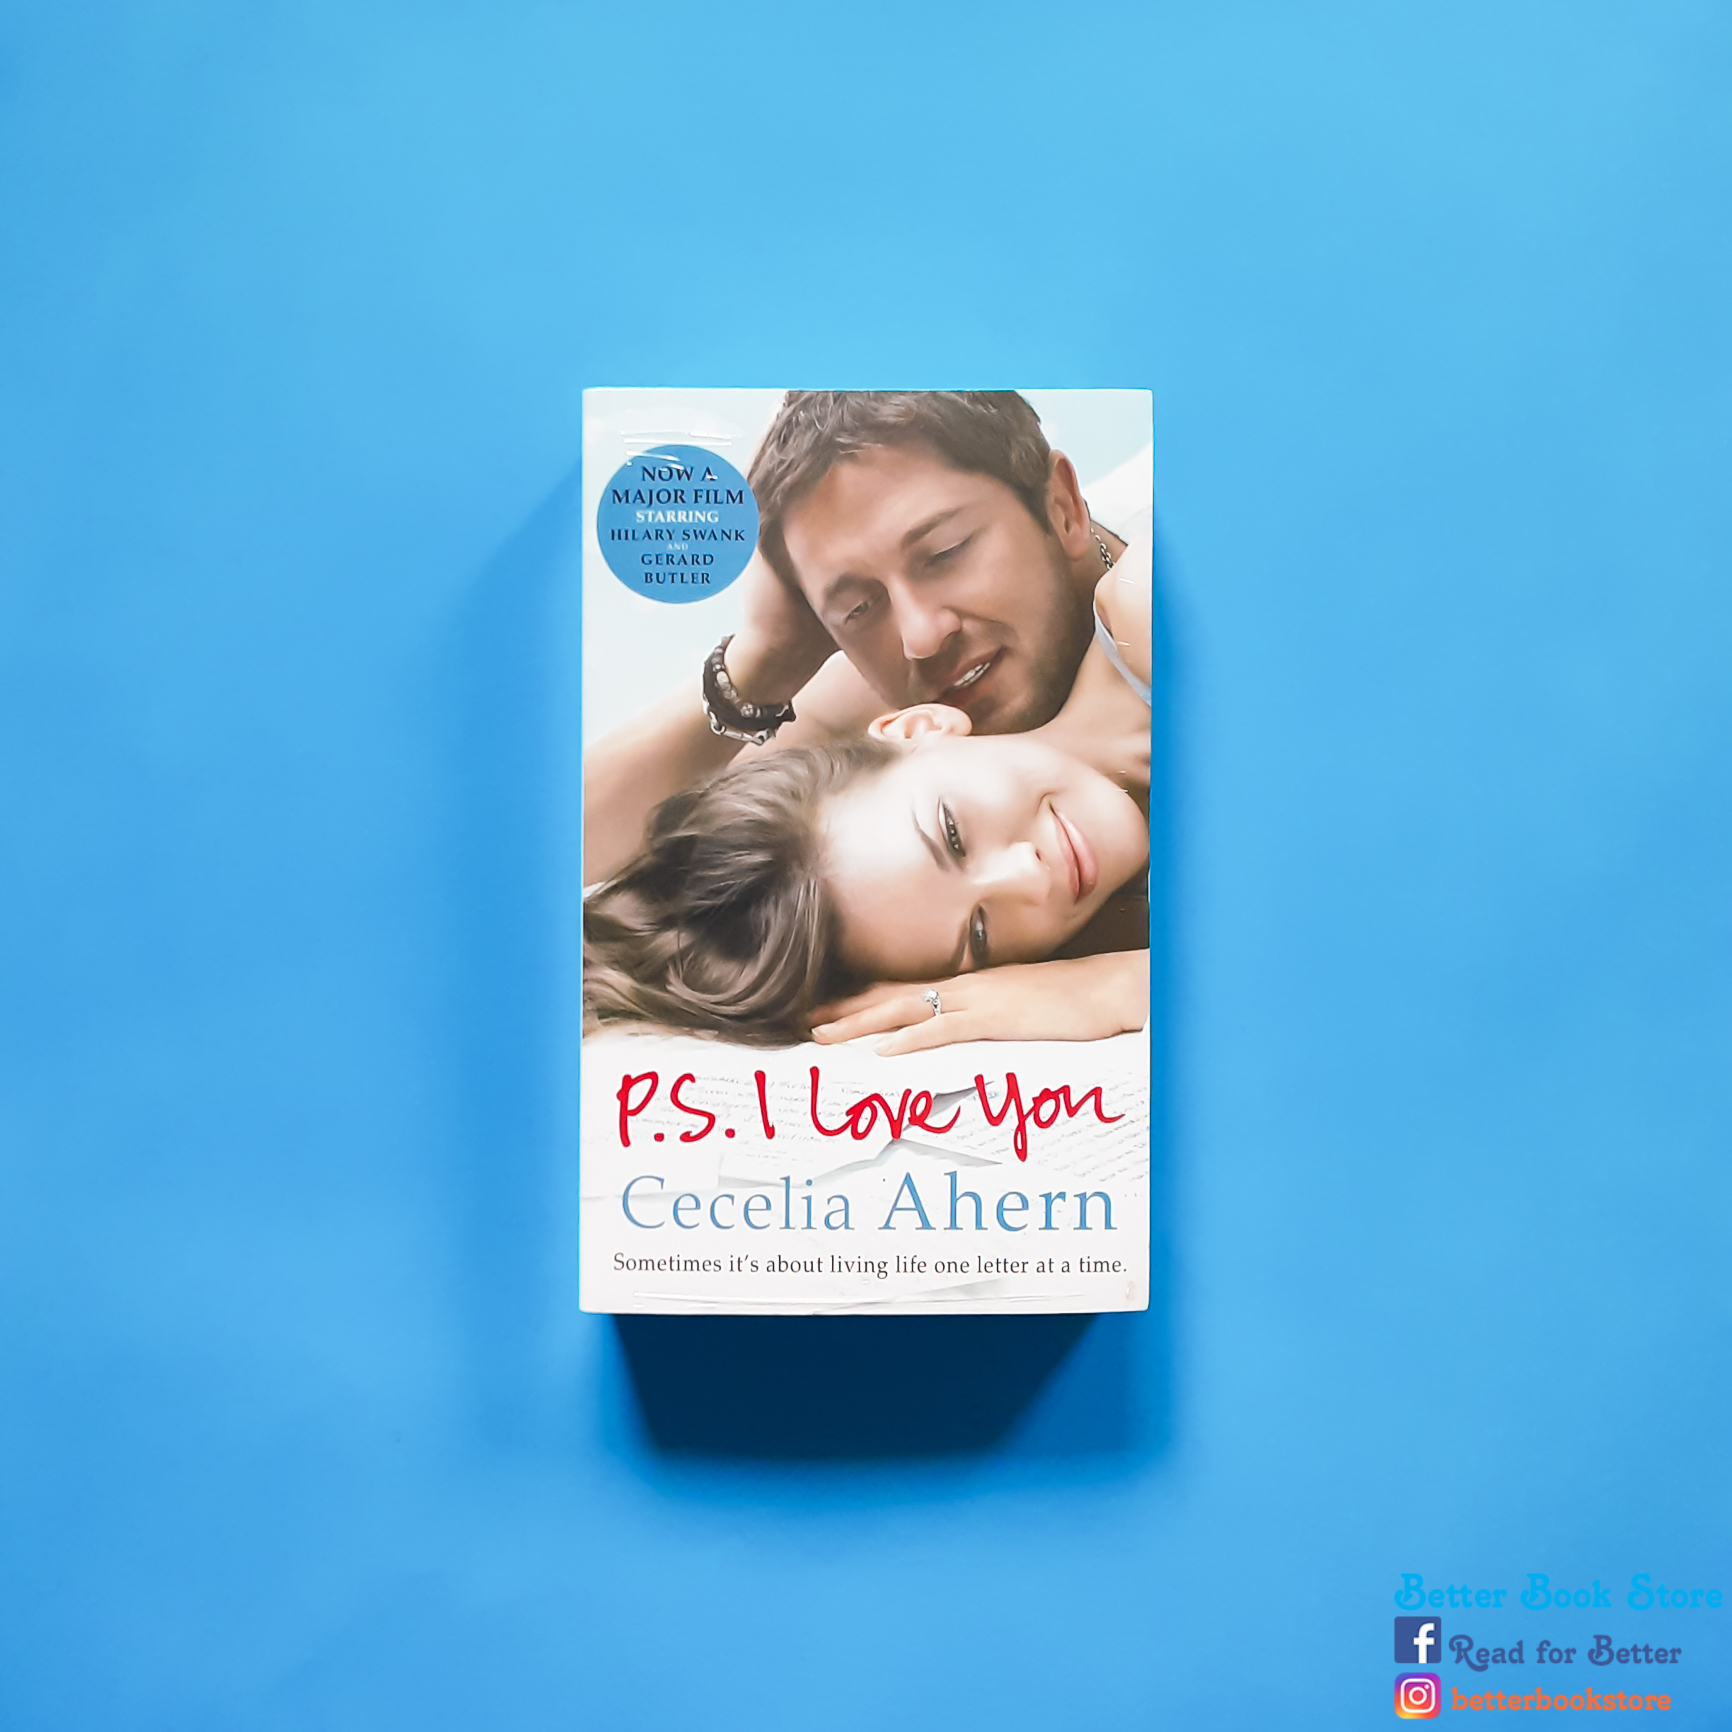 P.S. I Love You 📝 by Cecelia Ahern